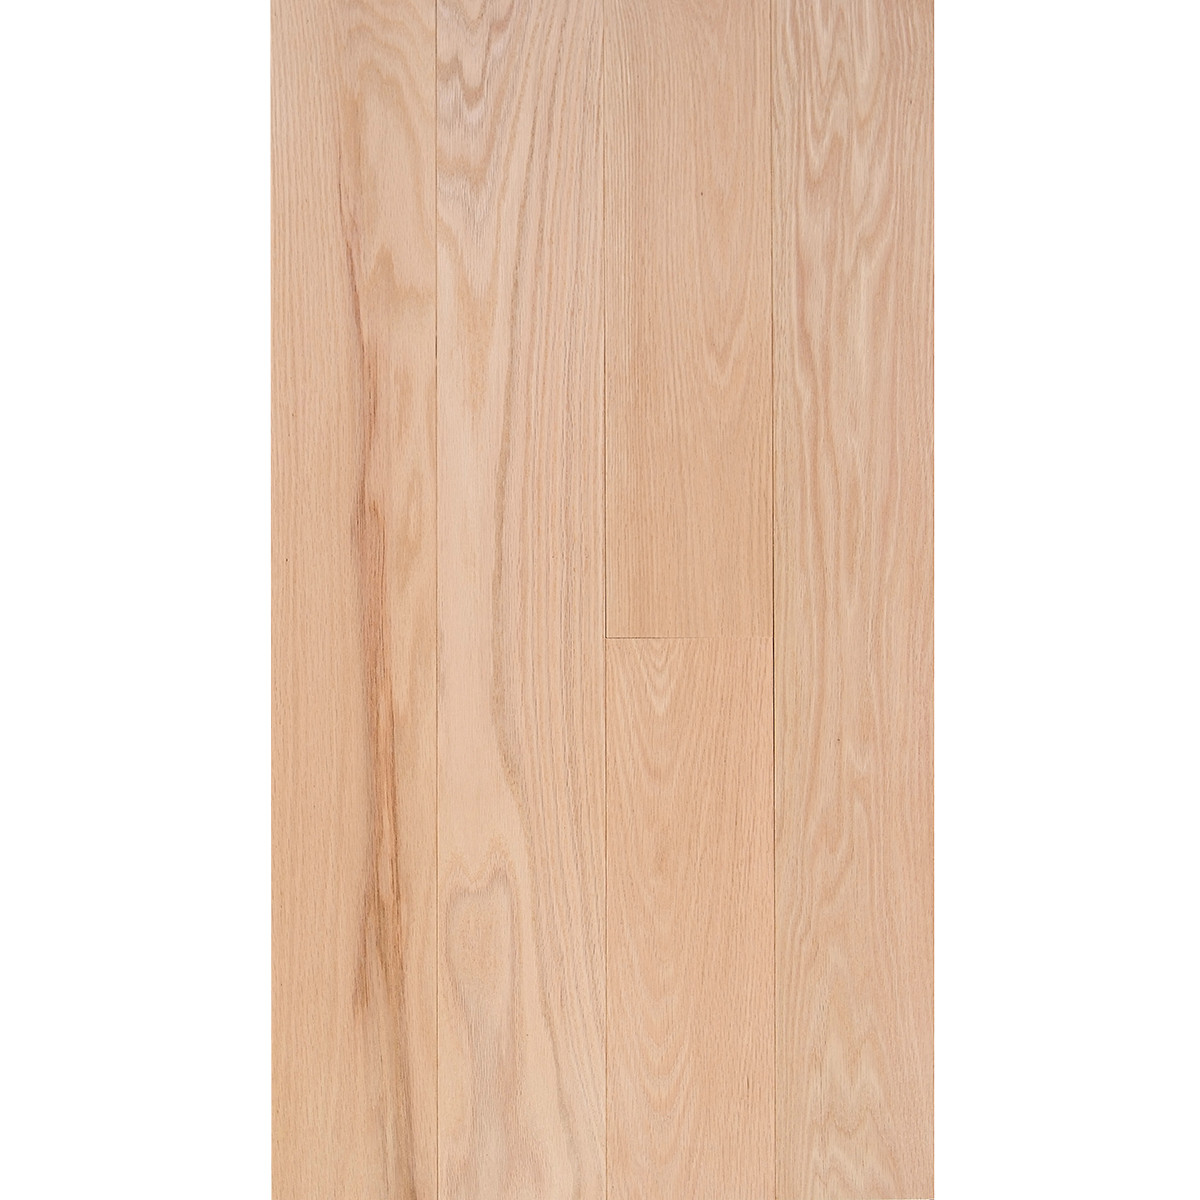 5 Maple Hardwood Flooring Of Red Oak 3 4 X 5 Select Grade Flooring with Fs 5 Redoak Select Em Flooring